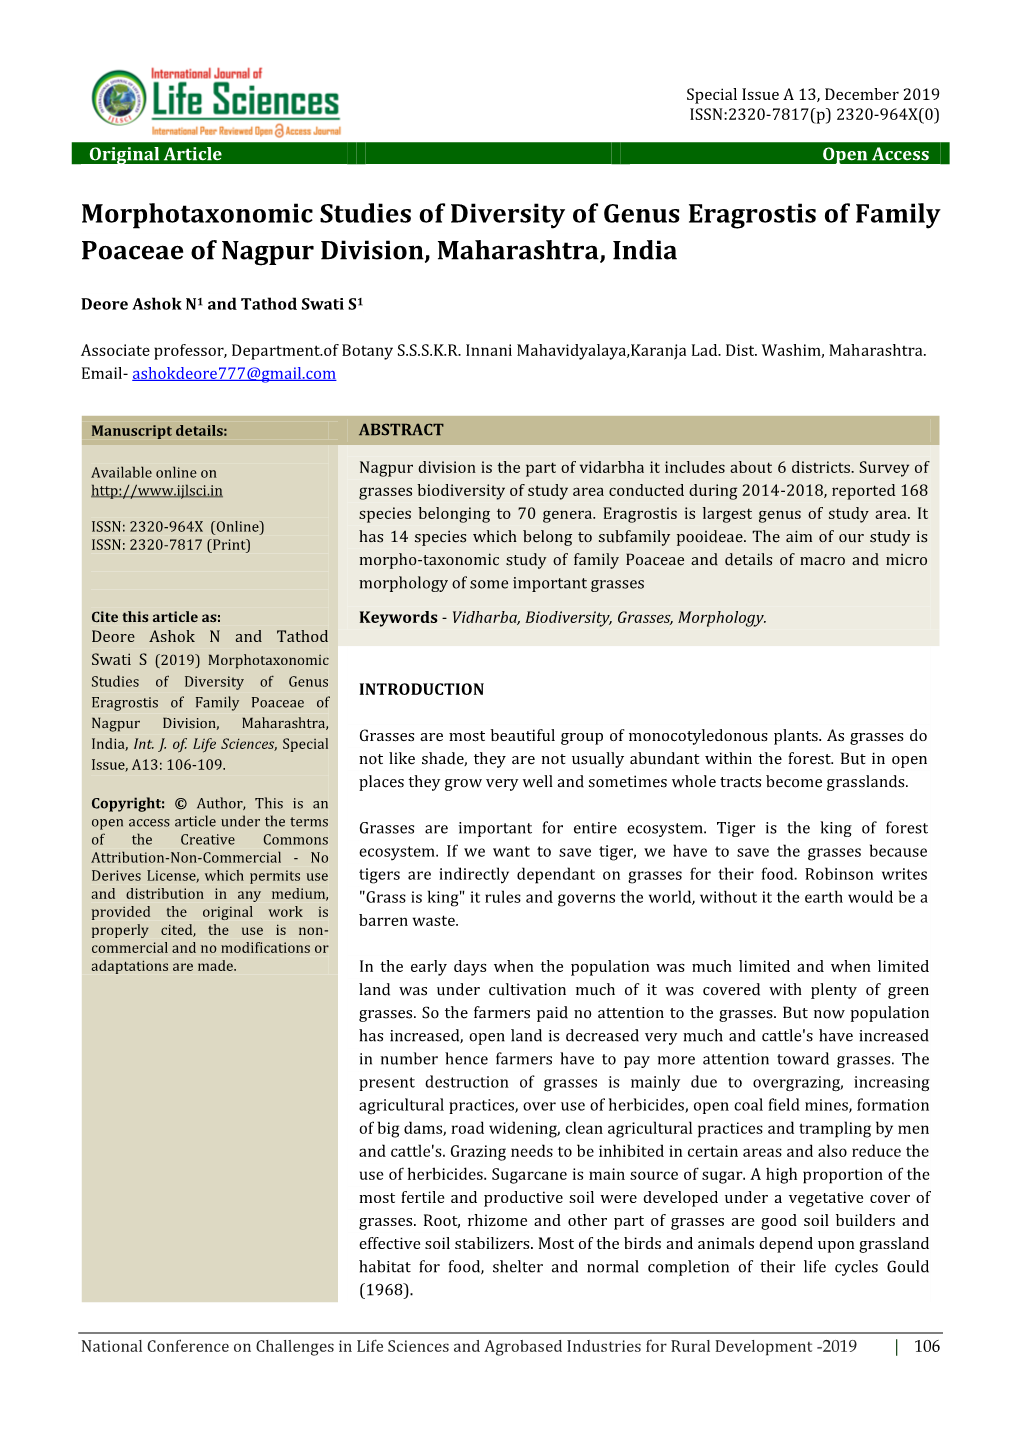 Morphotaxonomic Studies of Diversity of Genus Eragrostis of Family Poaceae of Nagpur Division, Maharashtra, India